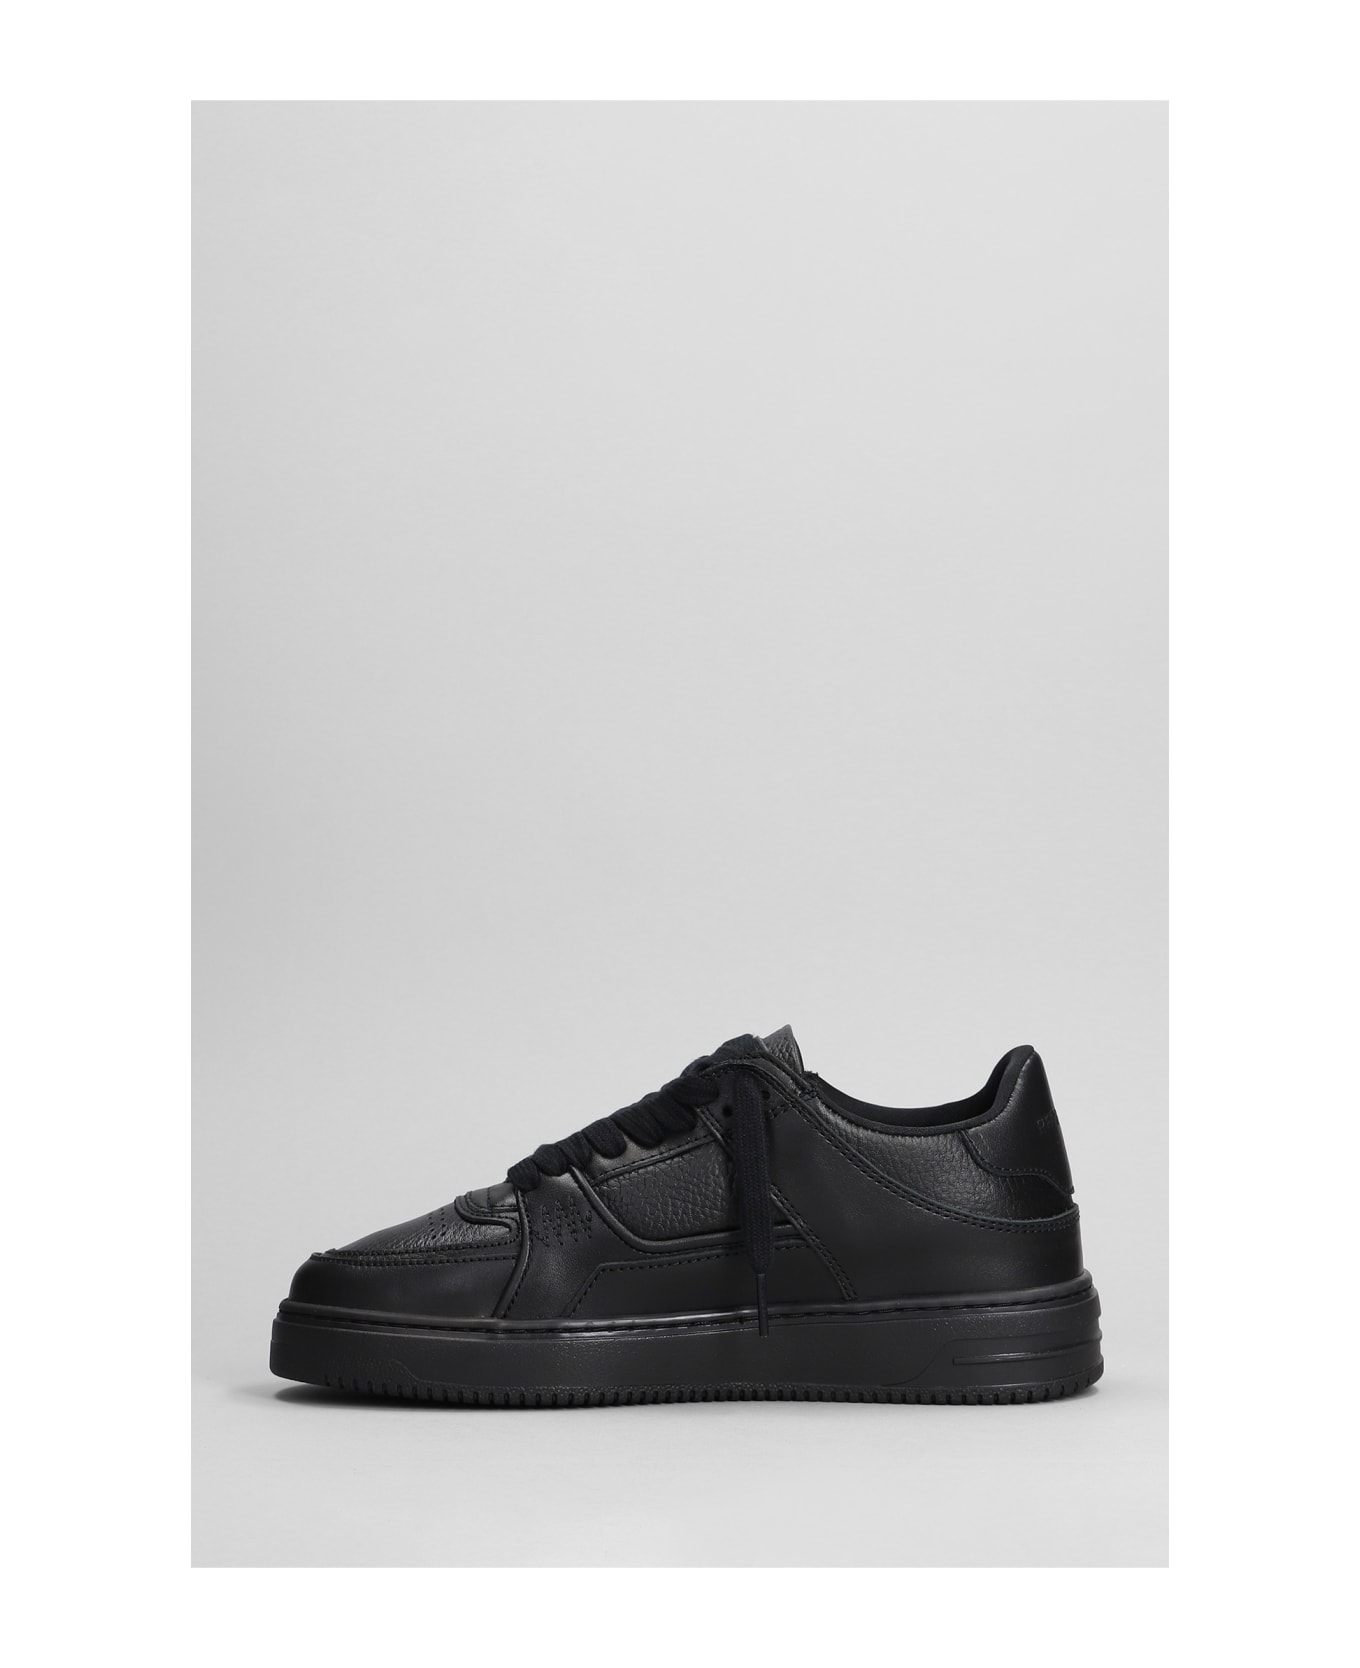 REPRESENT Apex Sneakers In Black Leather Sneakers - BLACK